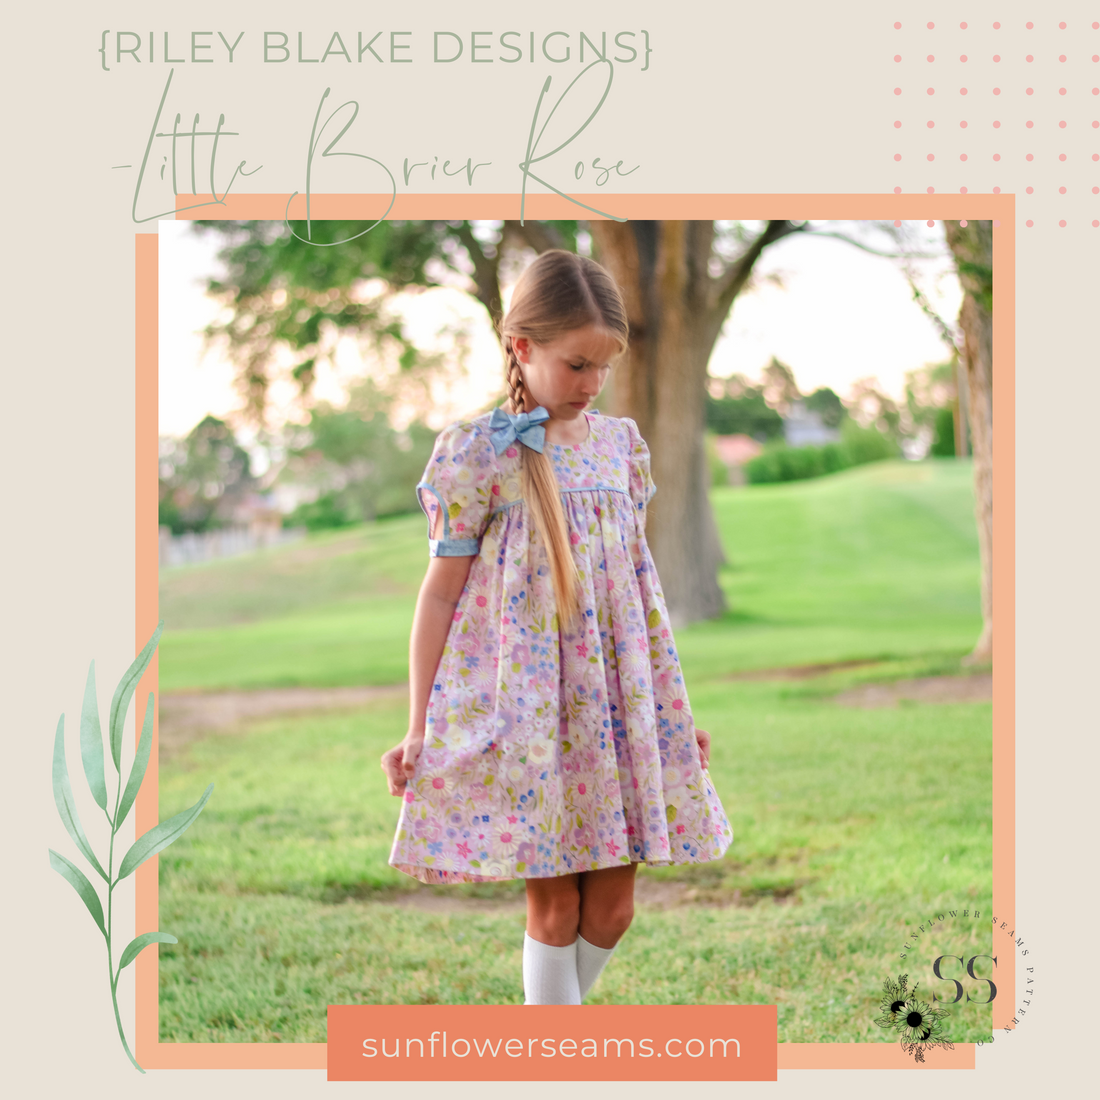 Little Brier Rose {Riley Blake Designs}